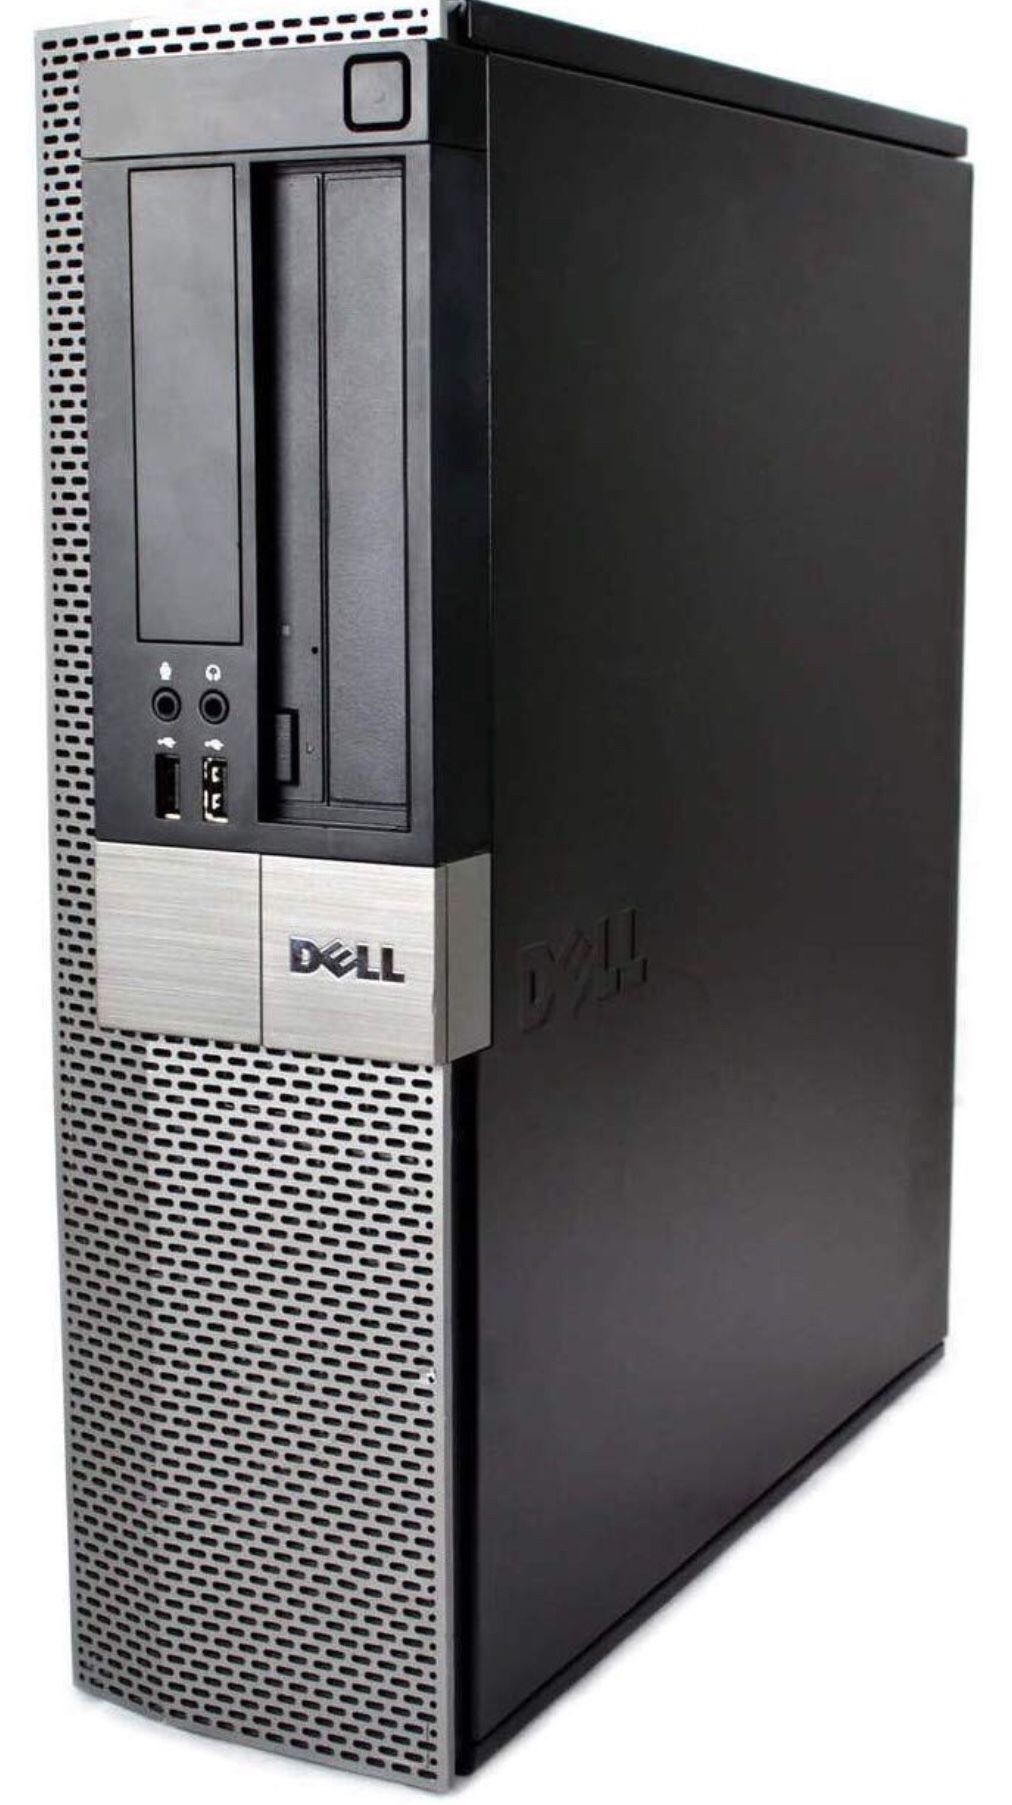 Dell Optiplex 980 Complete Set, i5 3.2GHz, 8GB RAM, 500GB HD, DVD, Windows 10 Pro (Renewed) and as a free bonus Hyperpi PC version installed on it